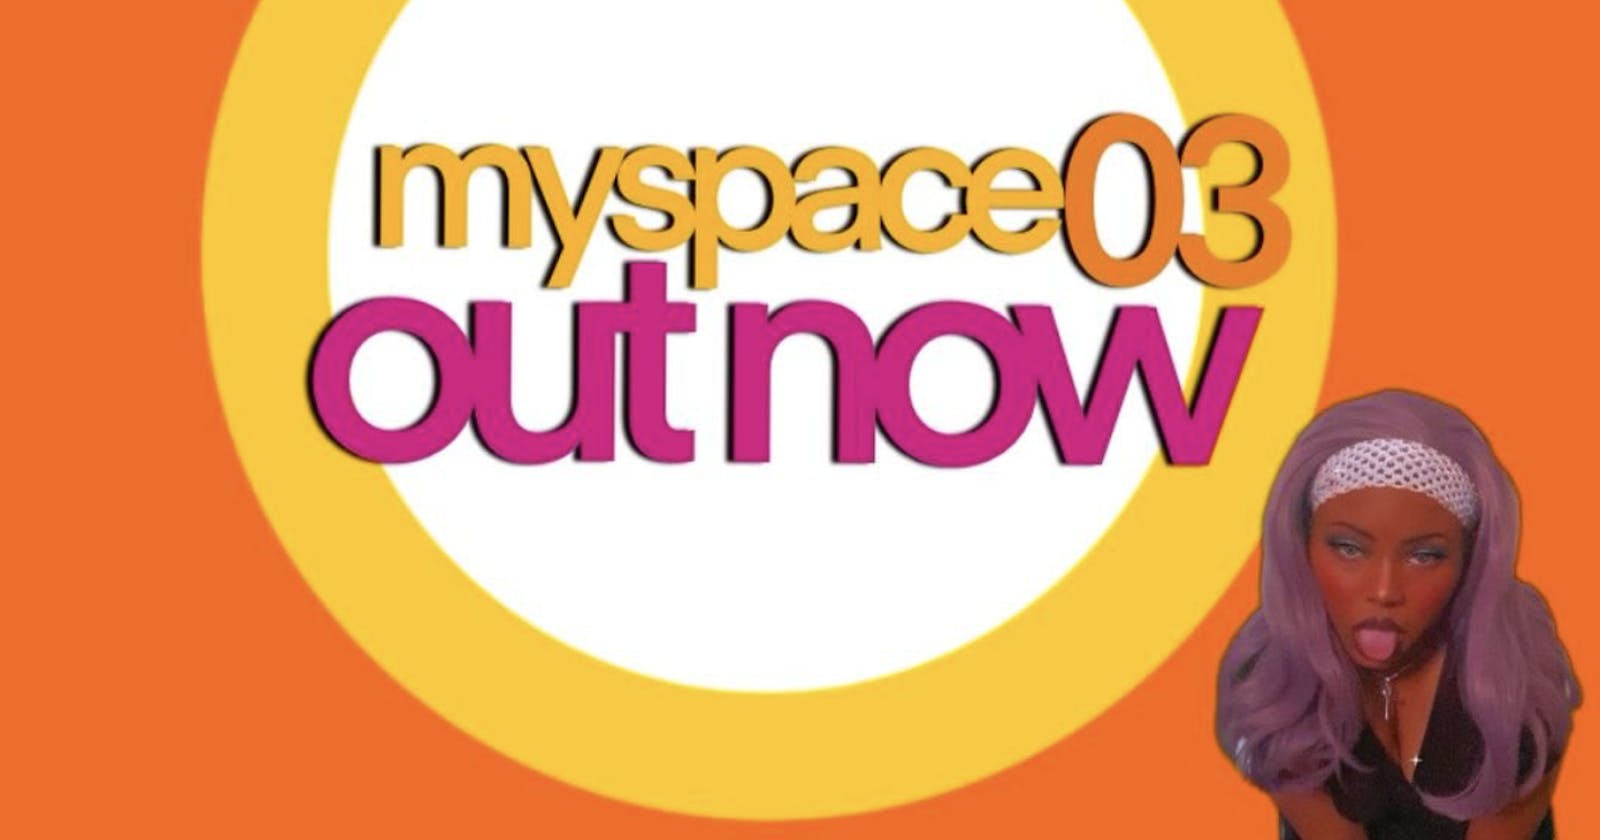 Mani Da Brat drops "Myspace 03" as her first single with Tapped Ai